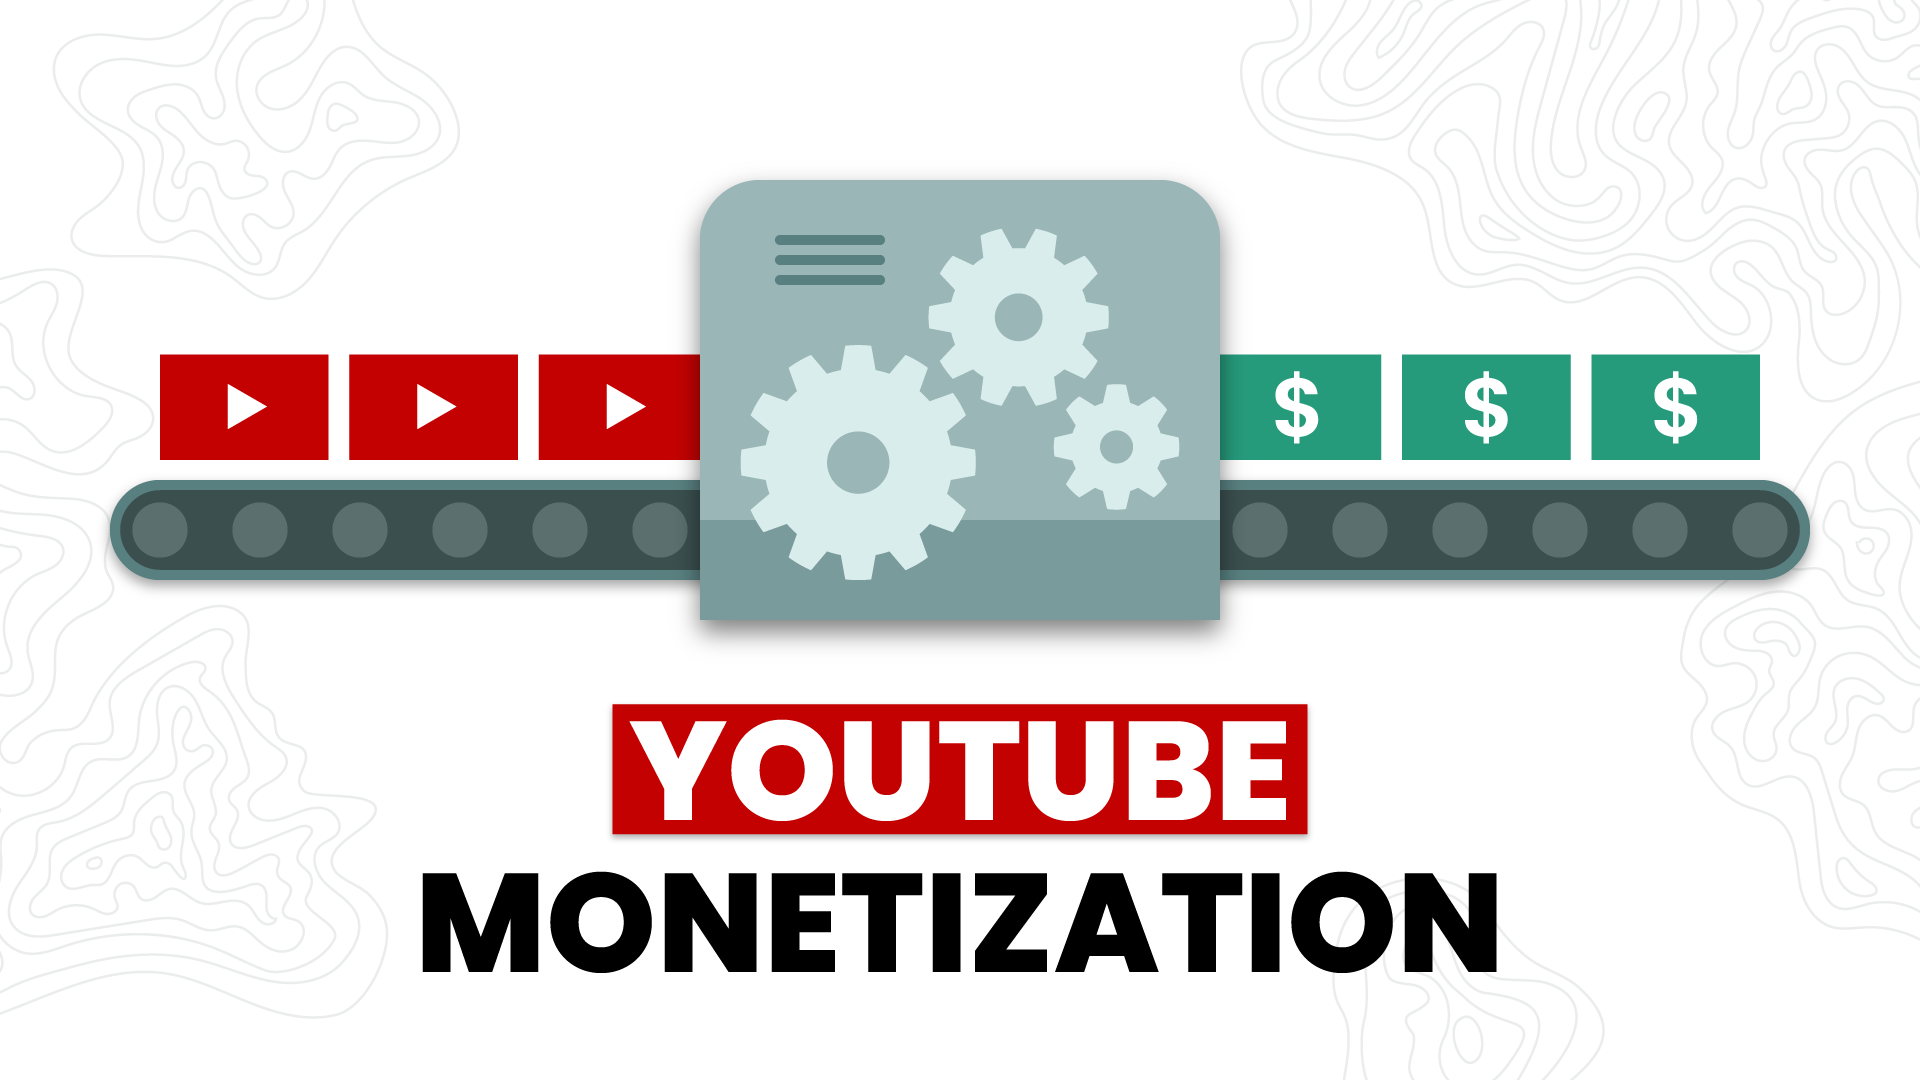 YouTube Monetization: Ways to Monetize for 2021